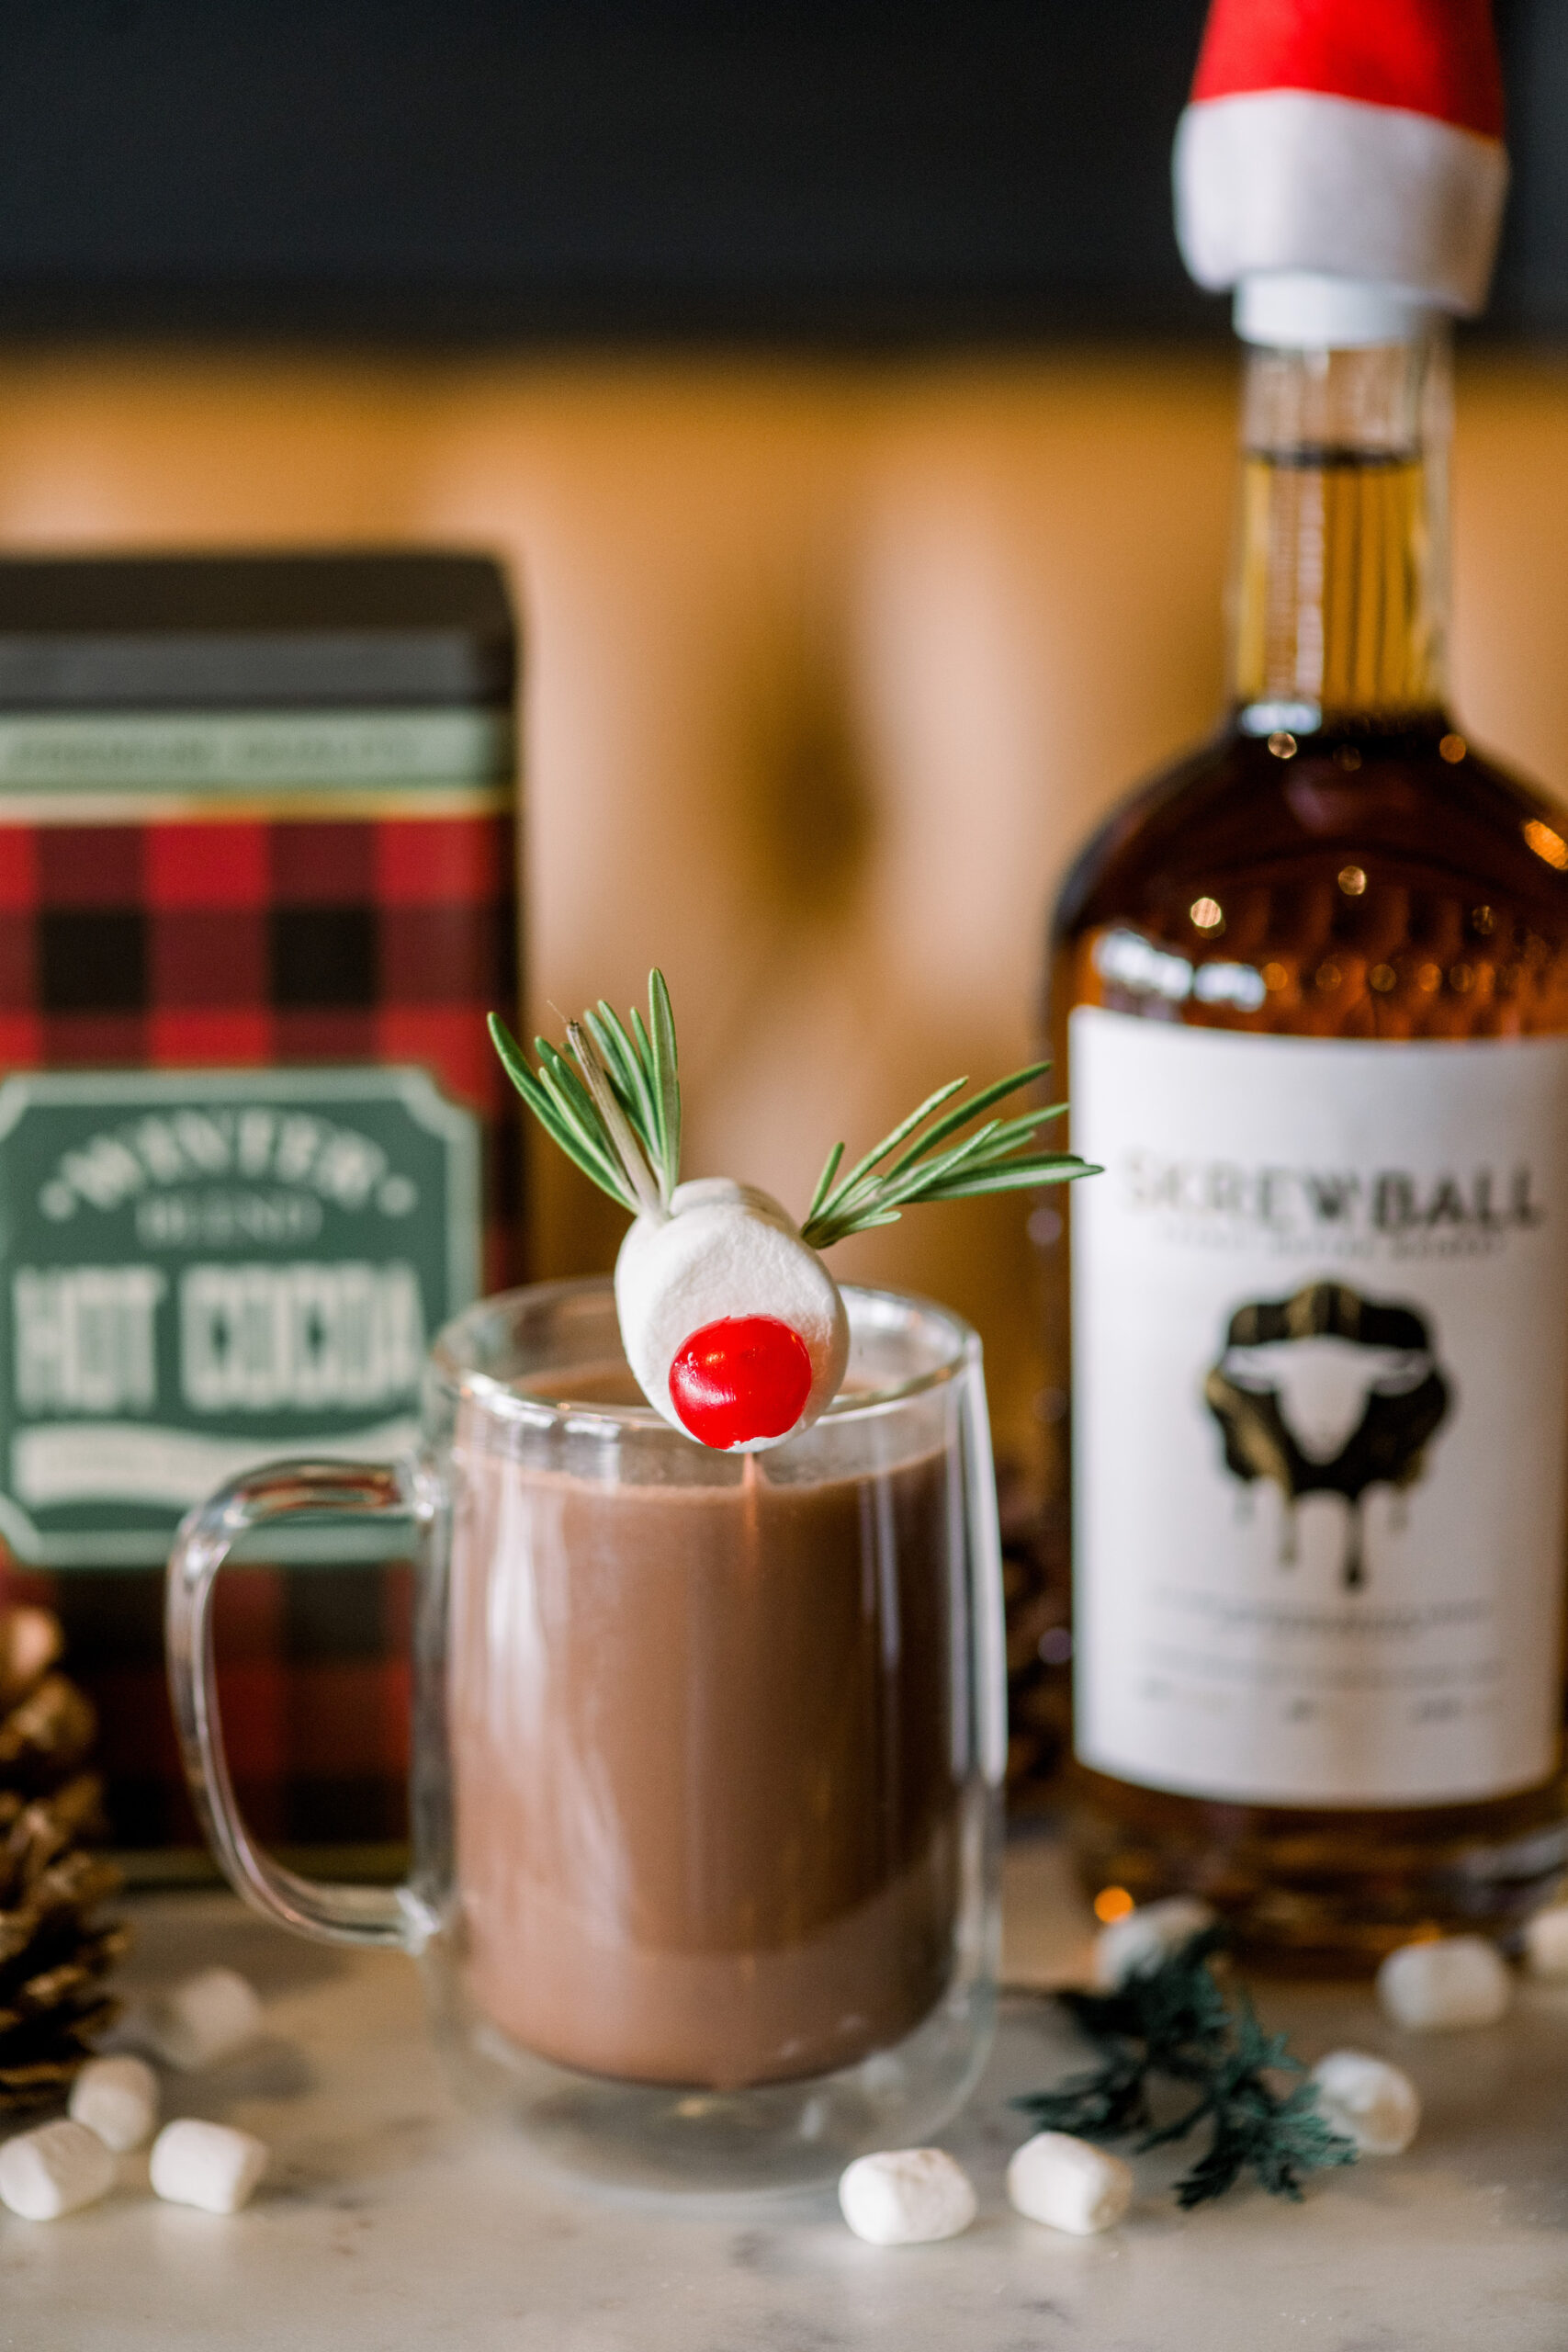 2 Skrewball Peanut Butter Whiskey Recipes For The Holidays – Beer Alien